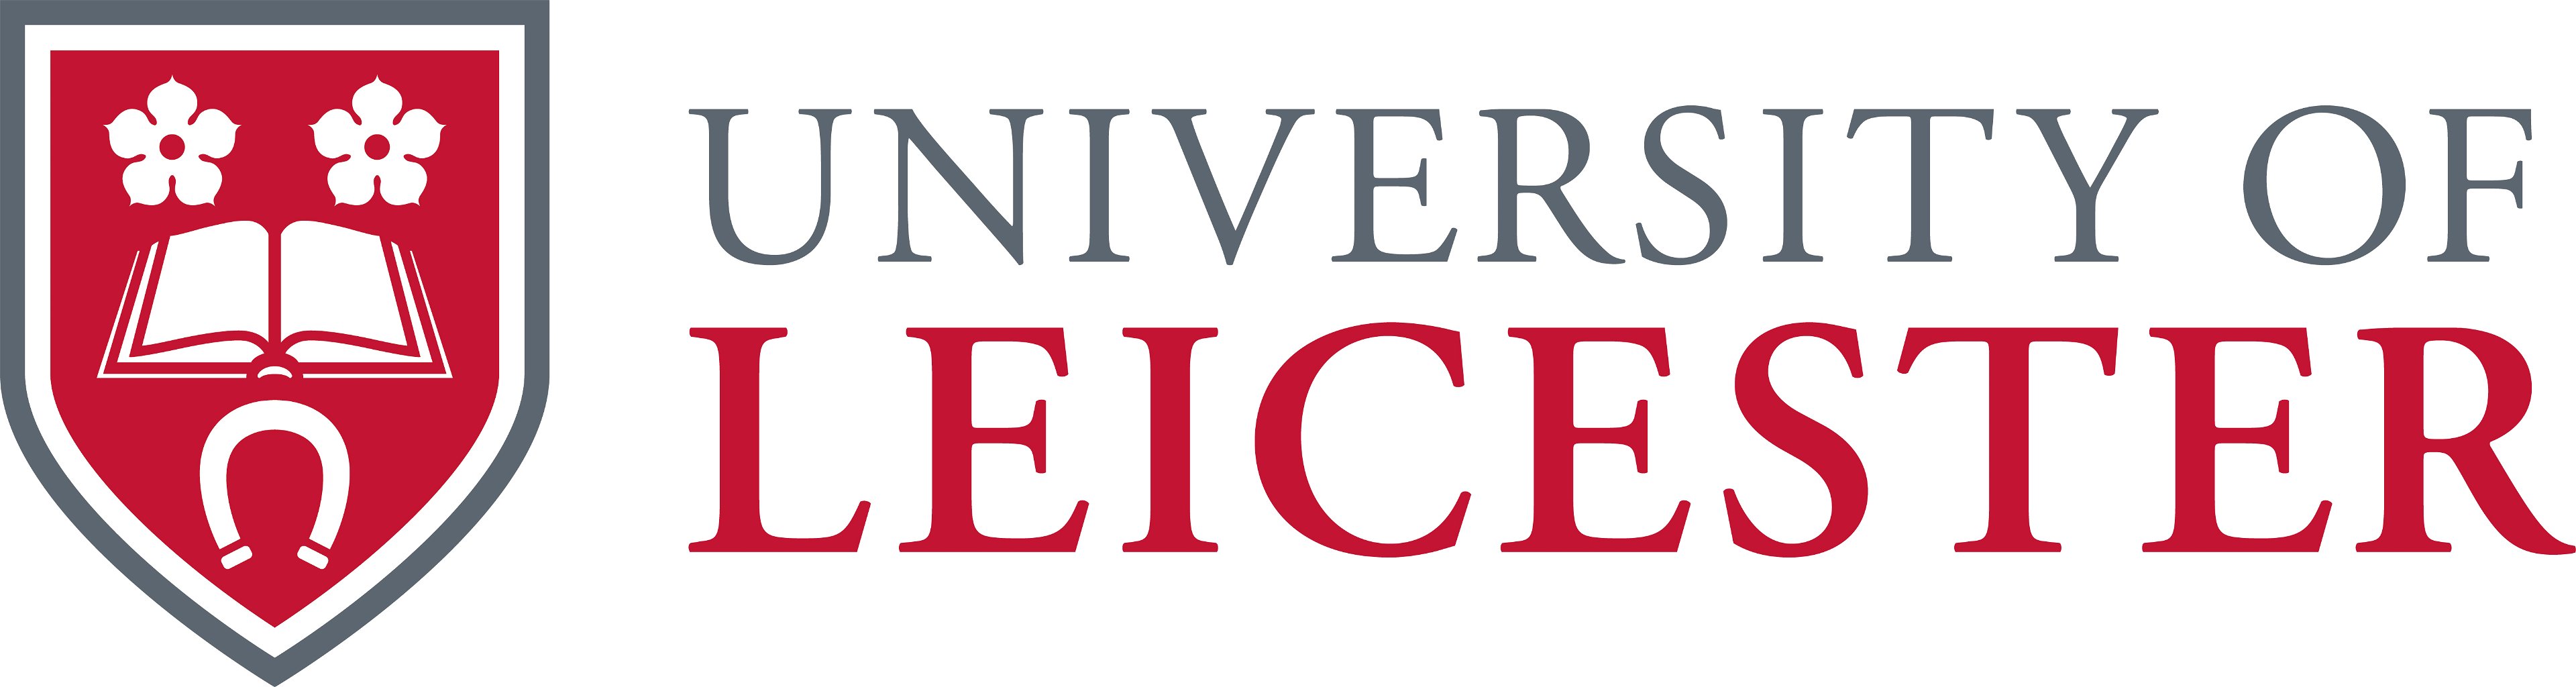 Media & Communication, University of Leicester logo